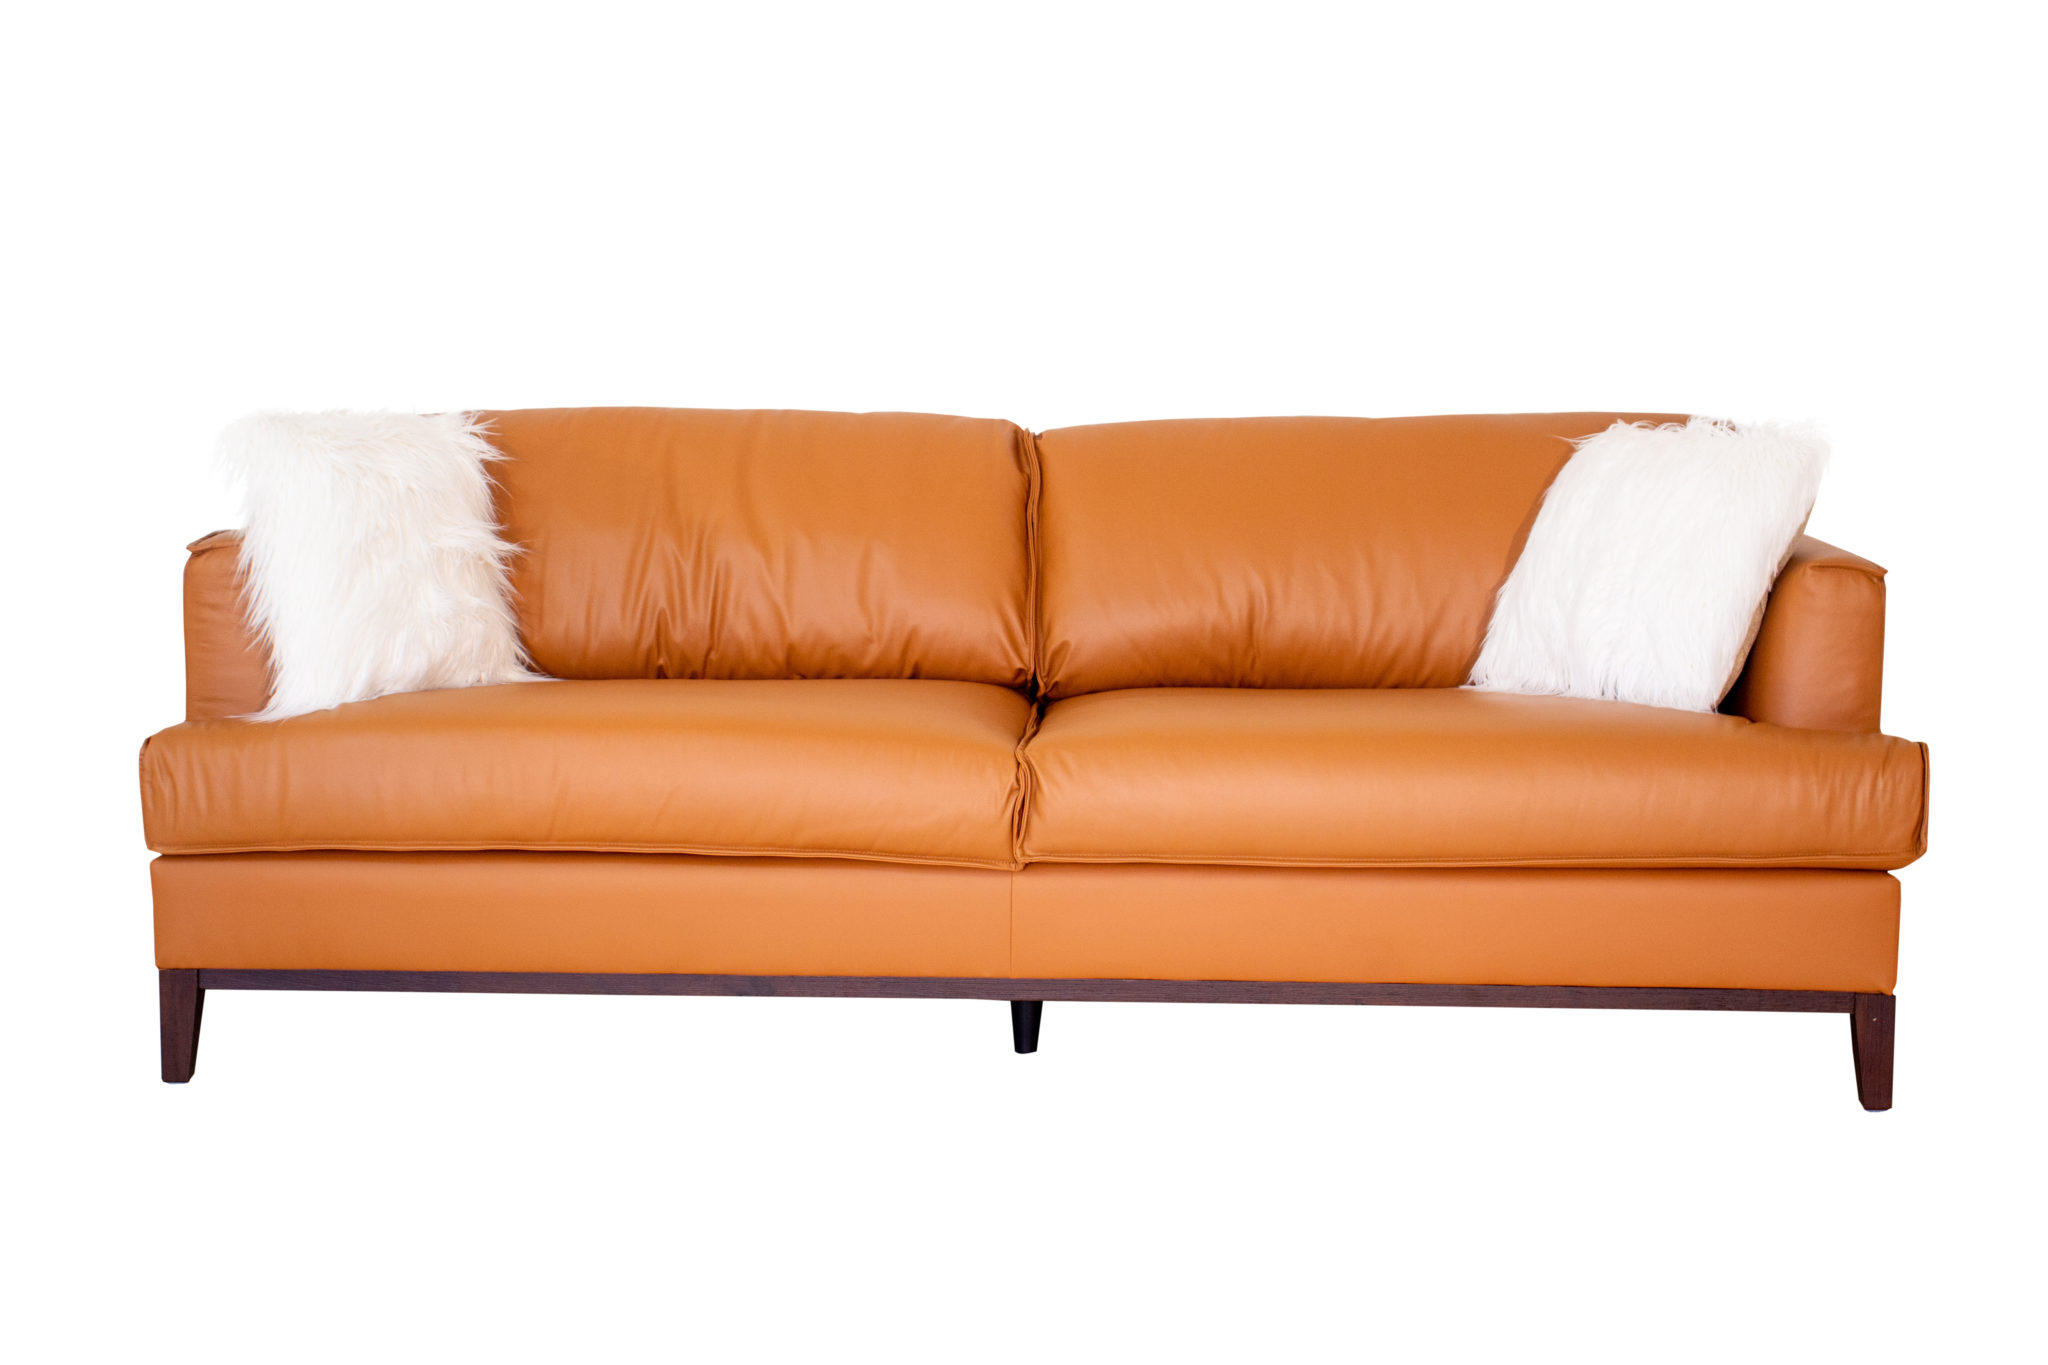 bailee leather match sofa